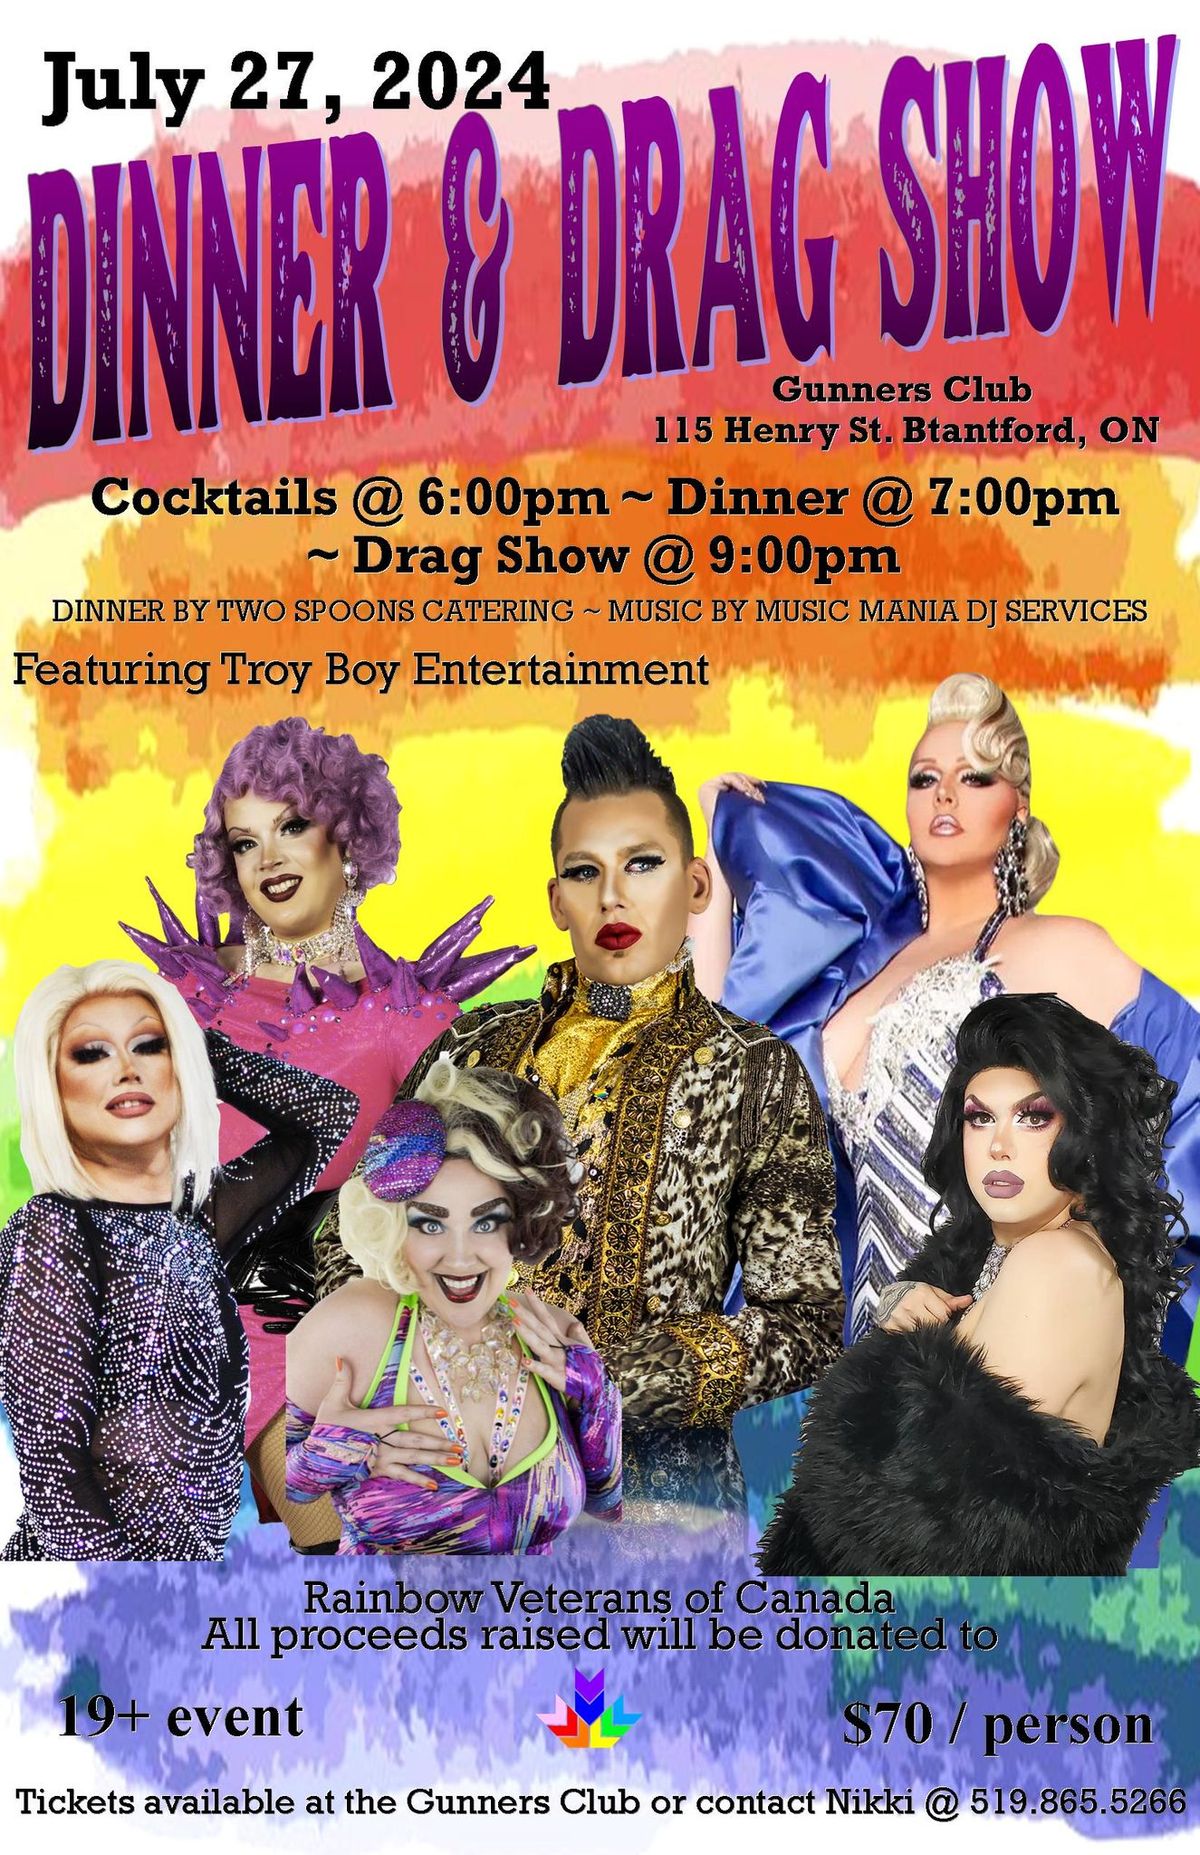 Gunner's Club presents: Dinner & Drag Show - Brantford - July 27th